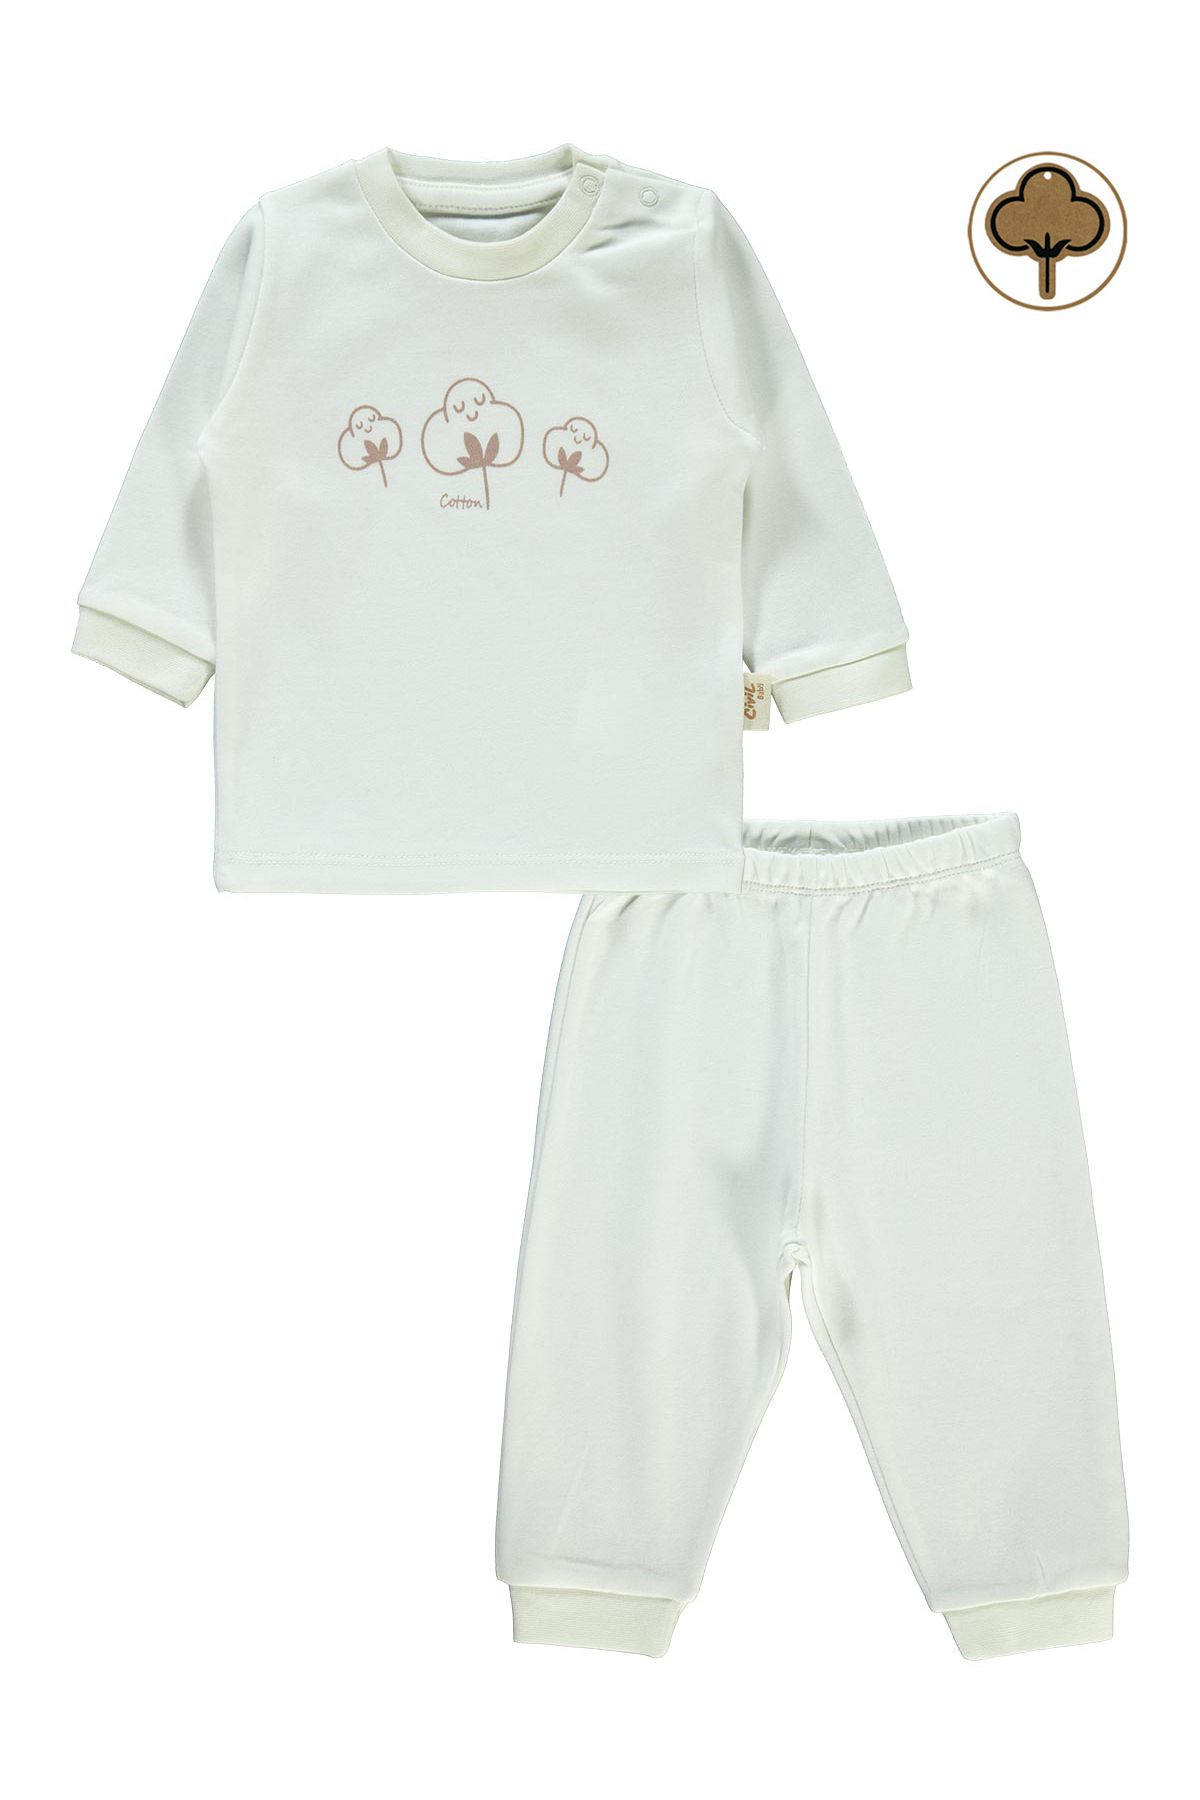 Civil Baby Bebek Organik Pijama Takımı 1-9 Ay Ekru